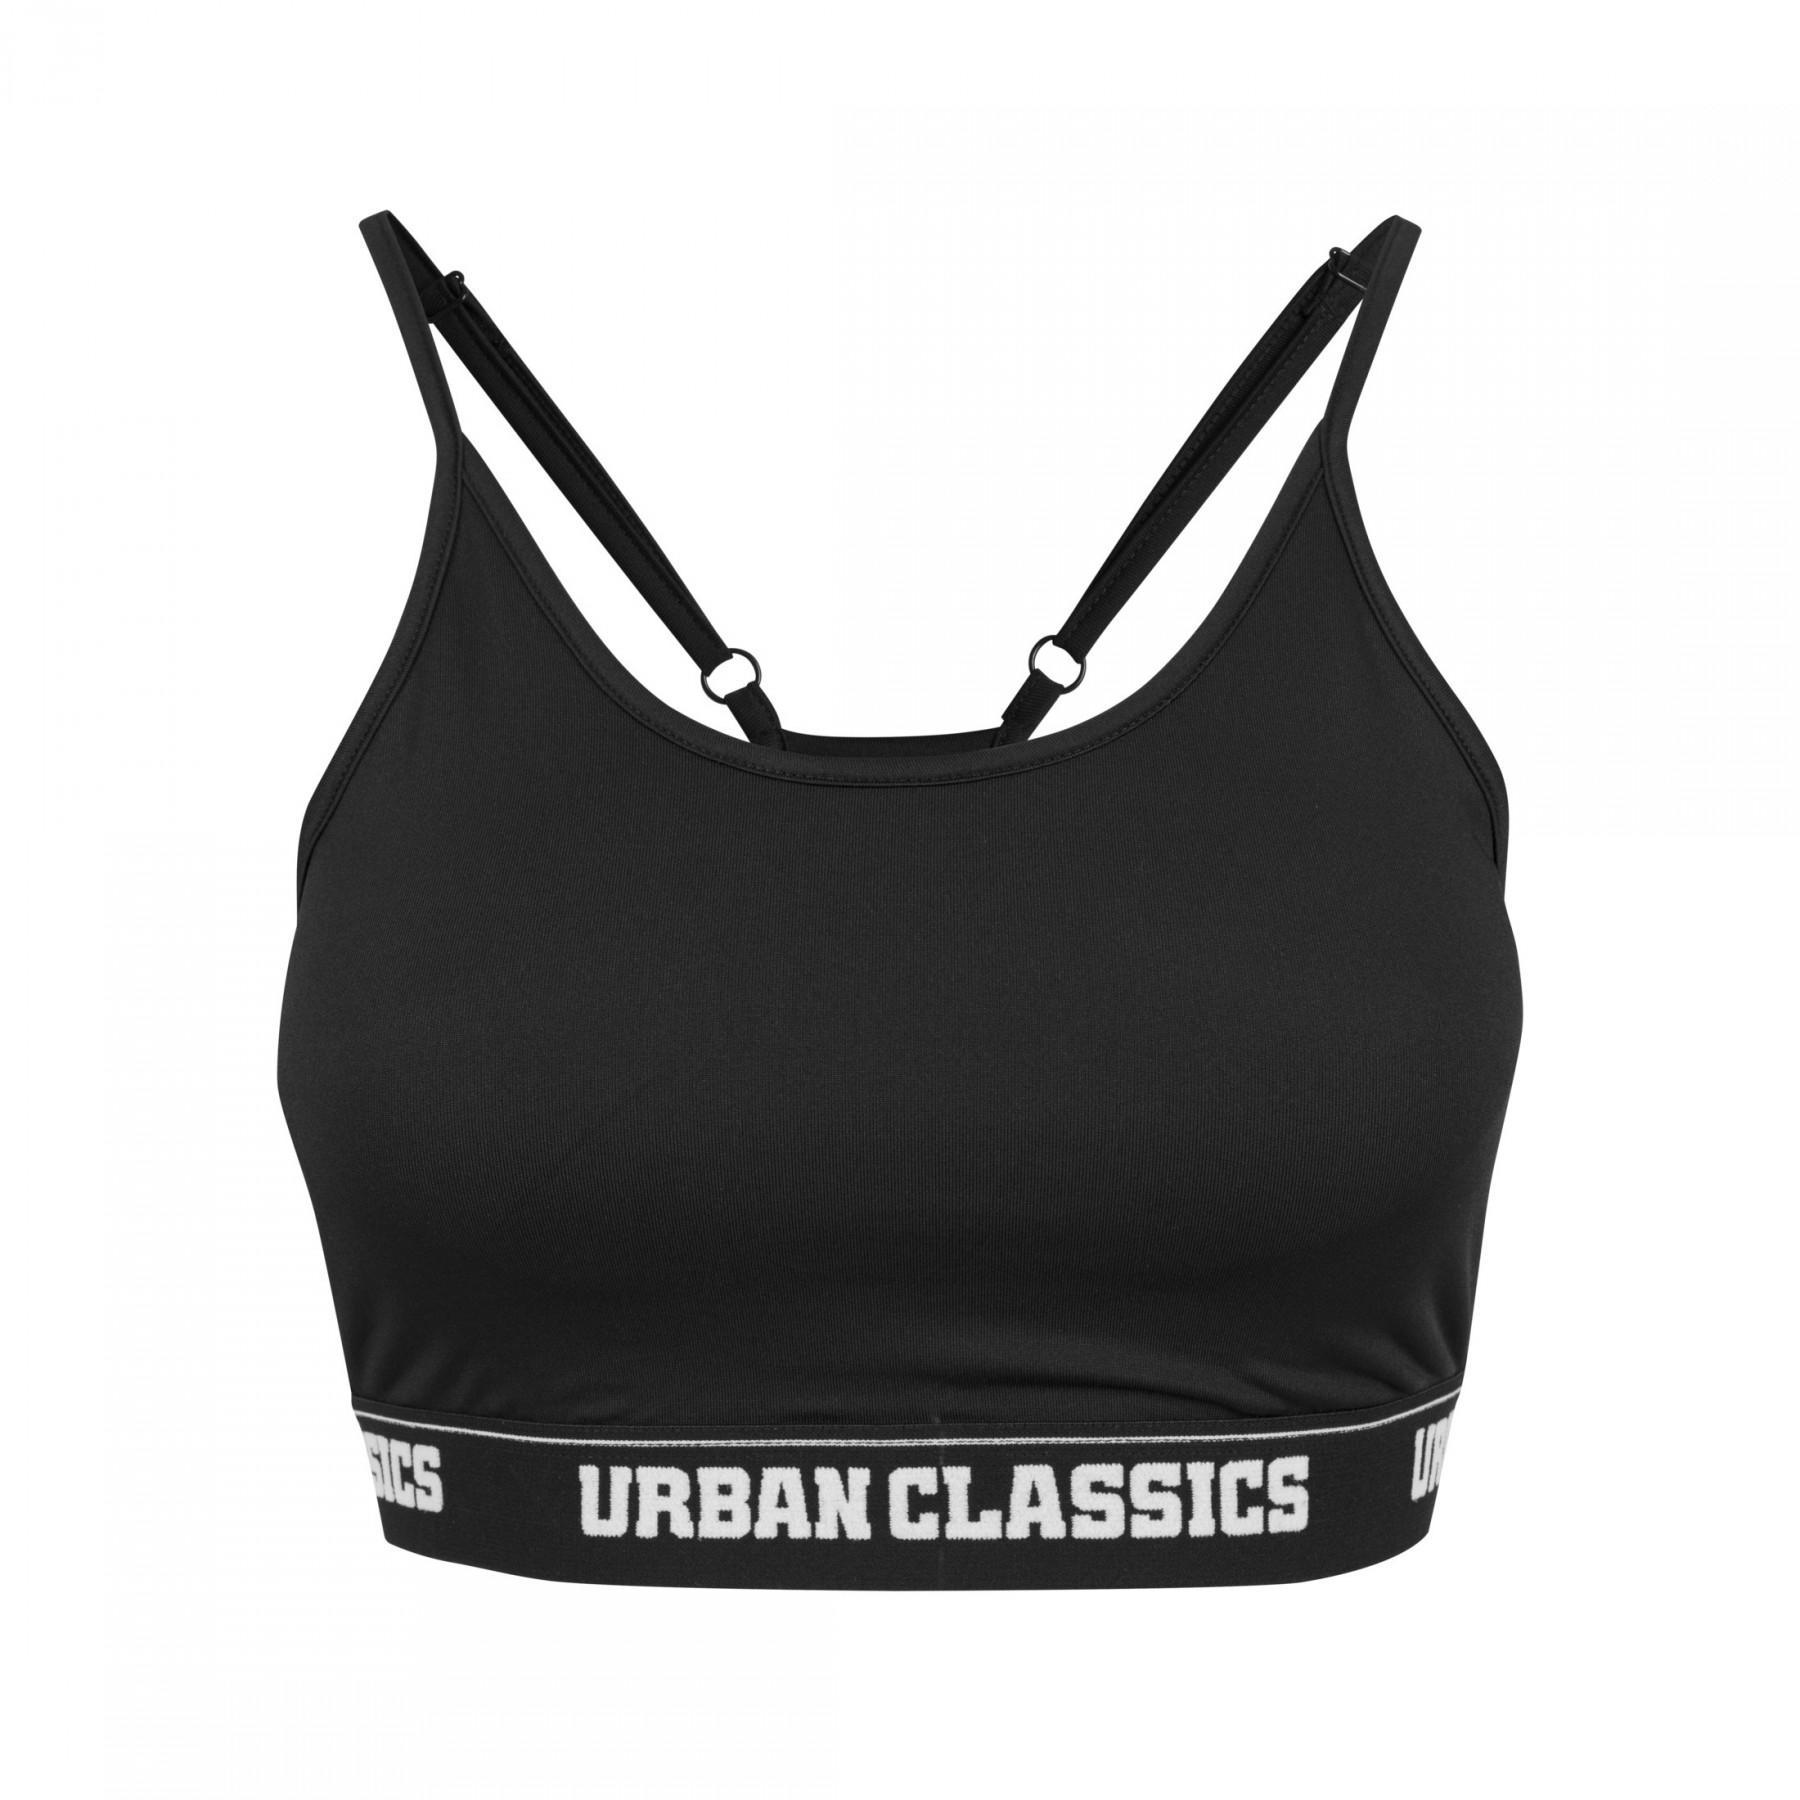 Women's Urban Classic sport bra